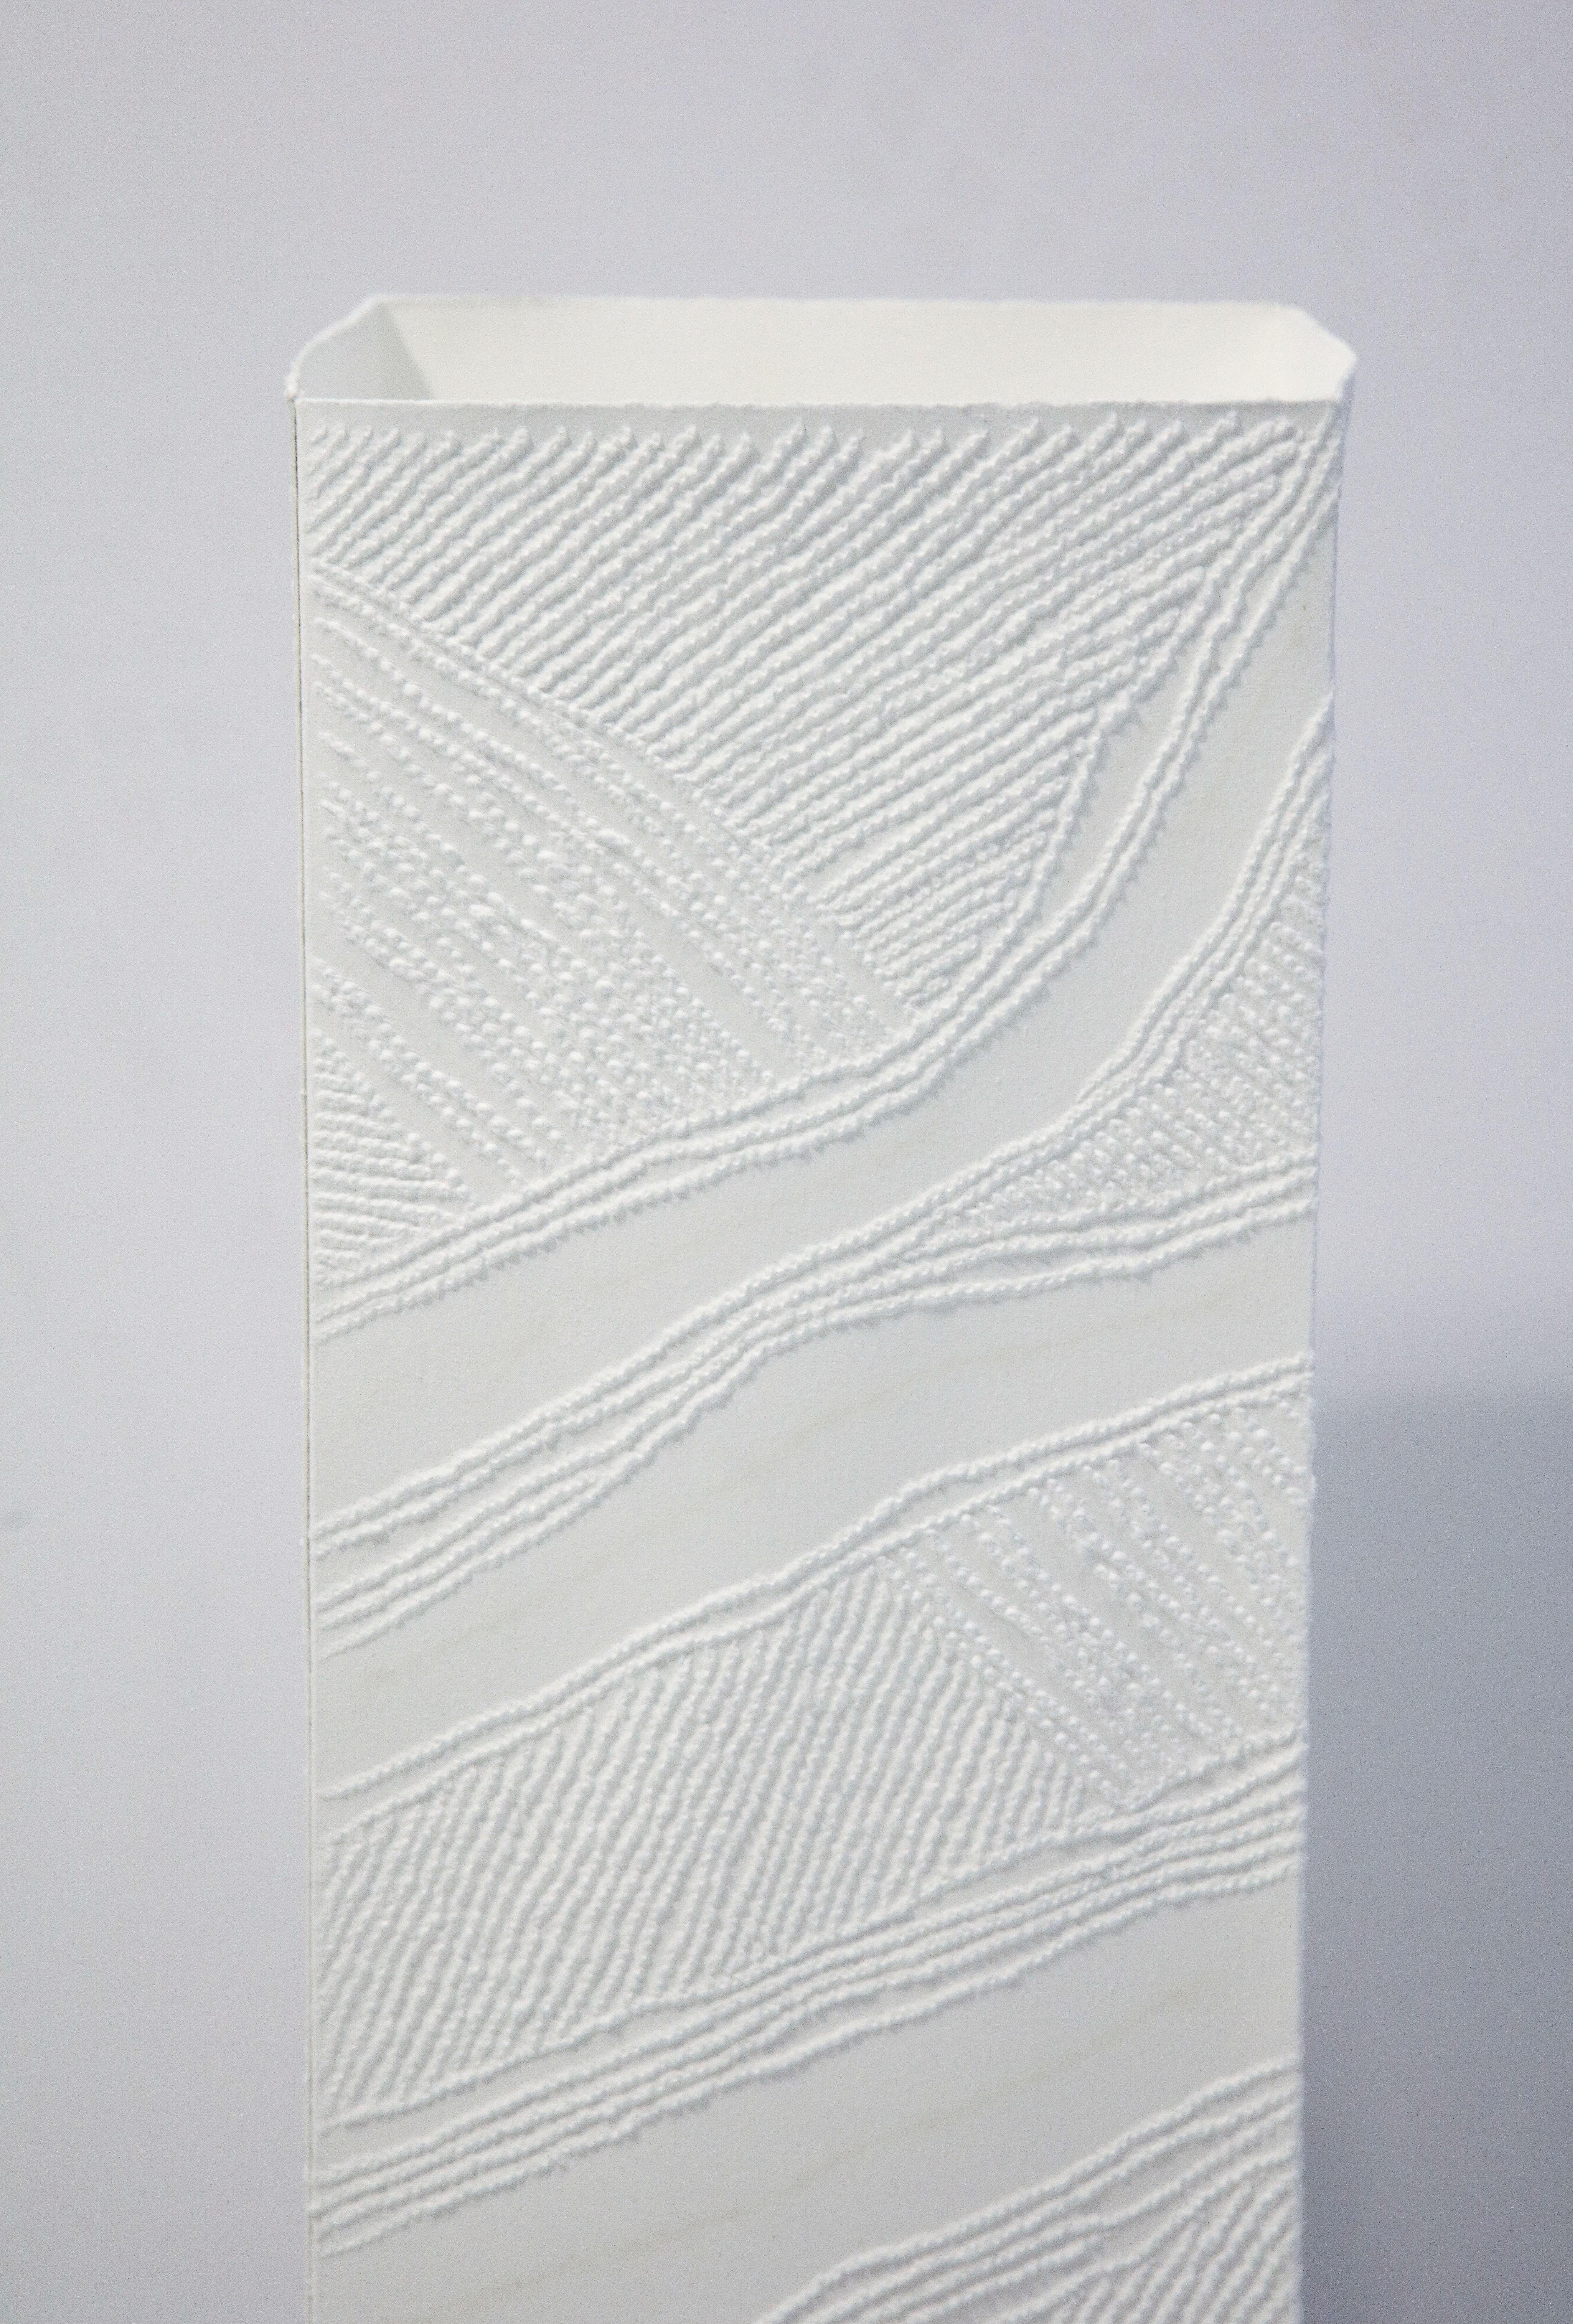 Fruitwood Lit Paper Sculpture by Antonin Anzil, France, 2018